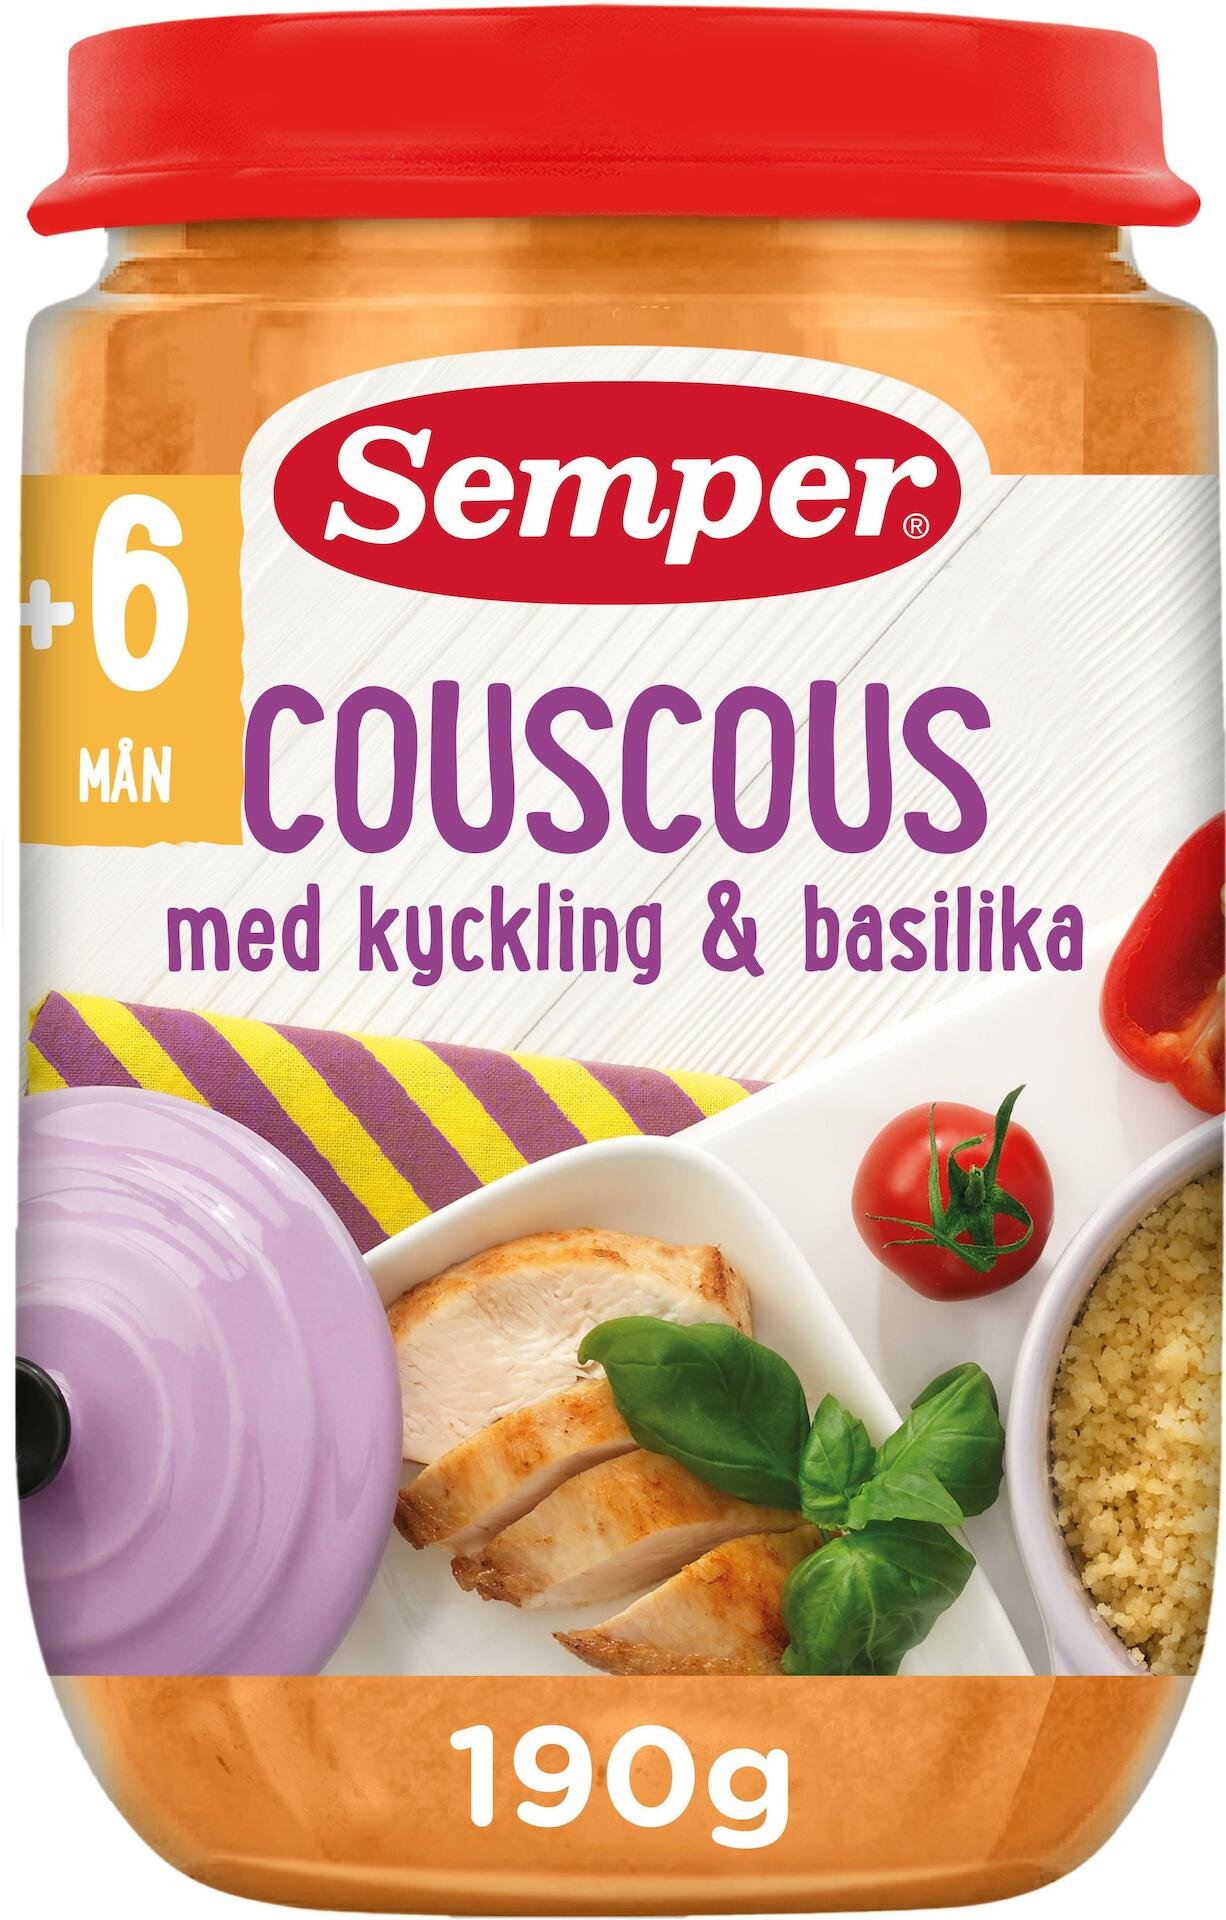 Semper Couscous Kyckling & Basilika 190g